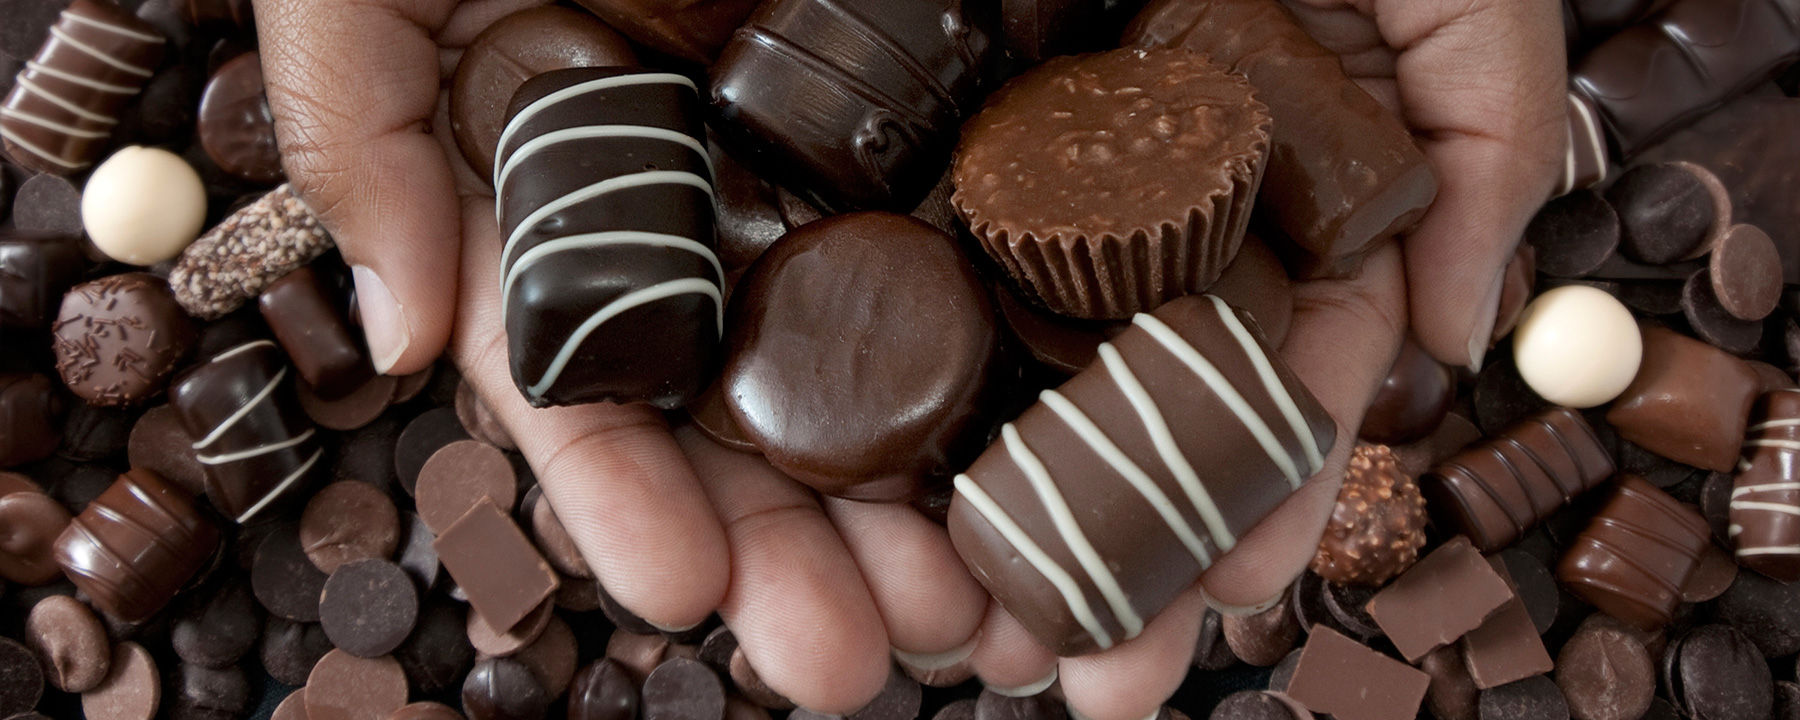 WomansHandsHoldingChocolate SOC - آیا شکلات می تواند عاملی برای سردرد باشد؟